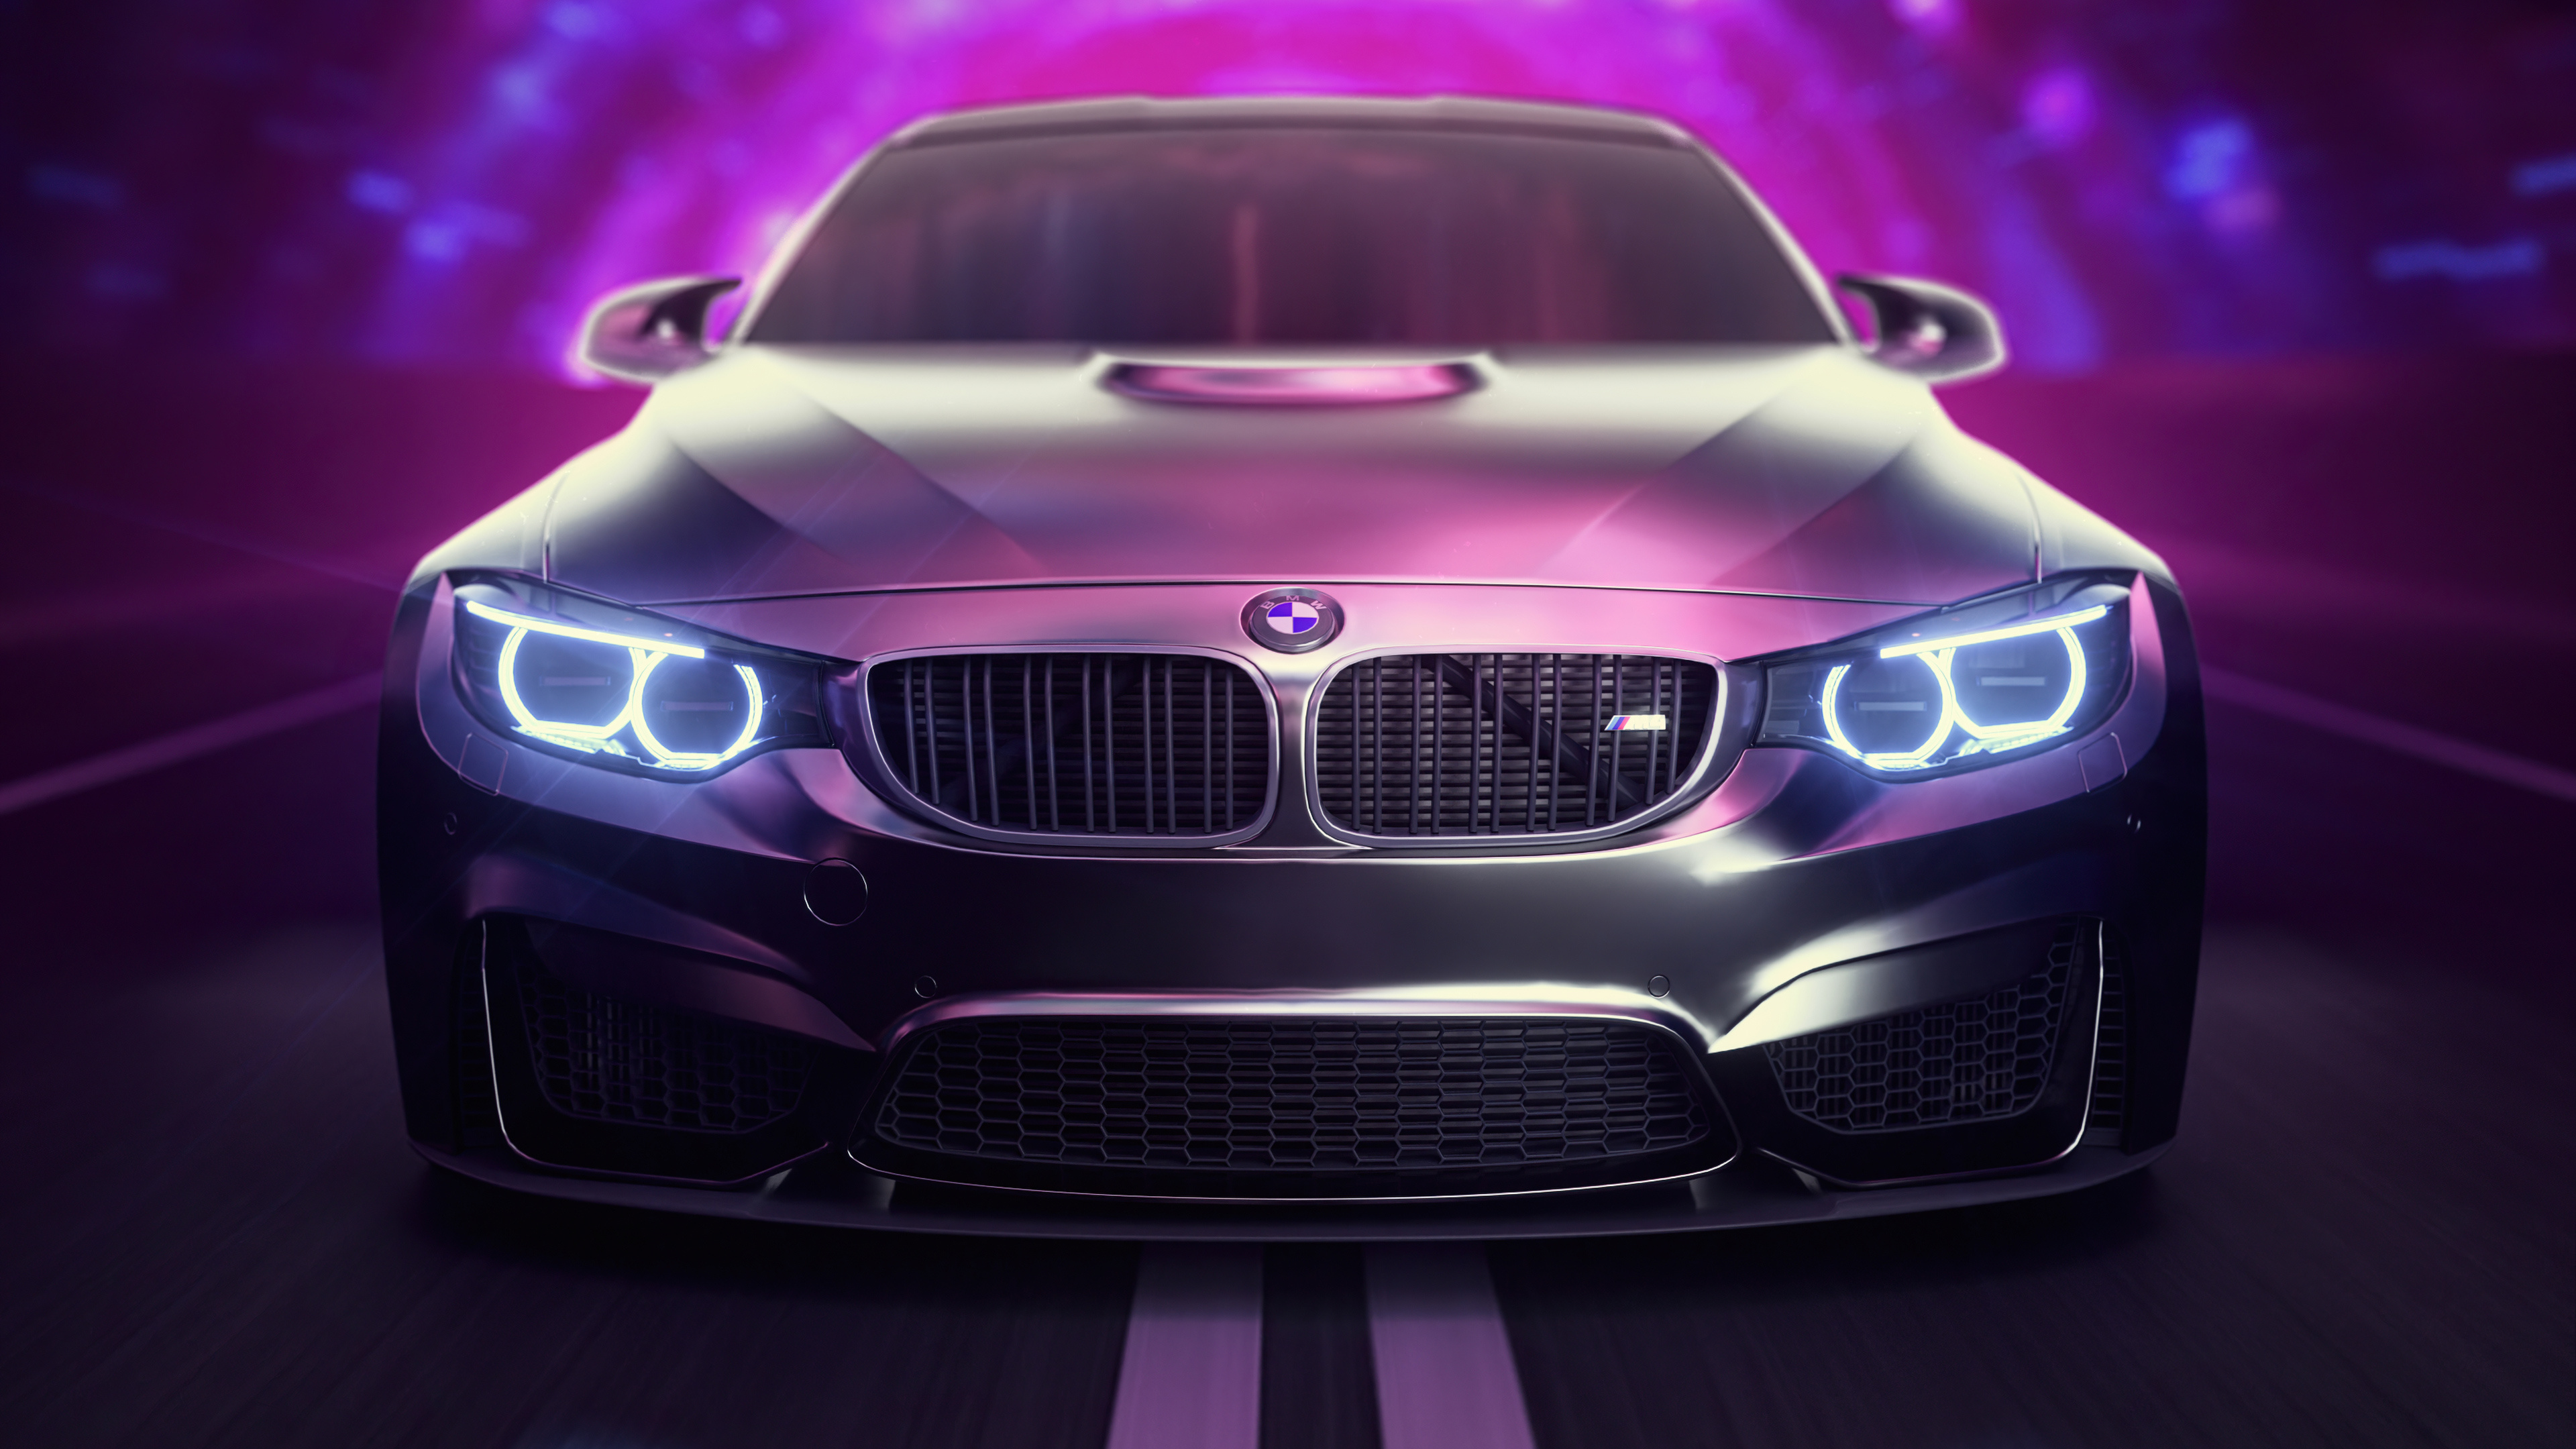 BMW M4, Speed of light, High-performance car, Striking visuals, 3840x2160 4K Desktop